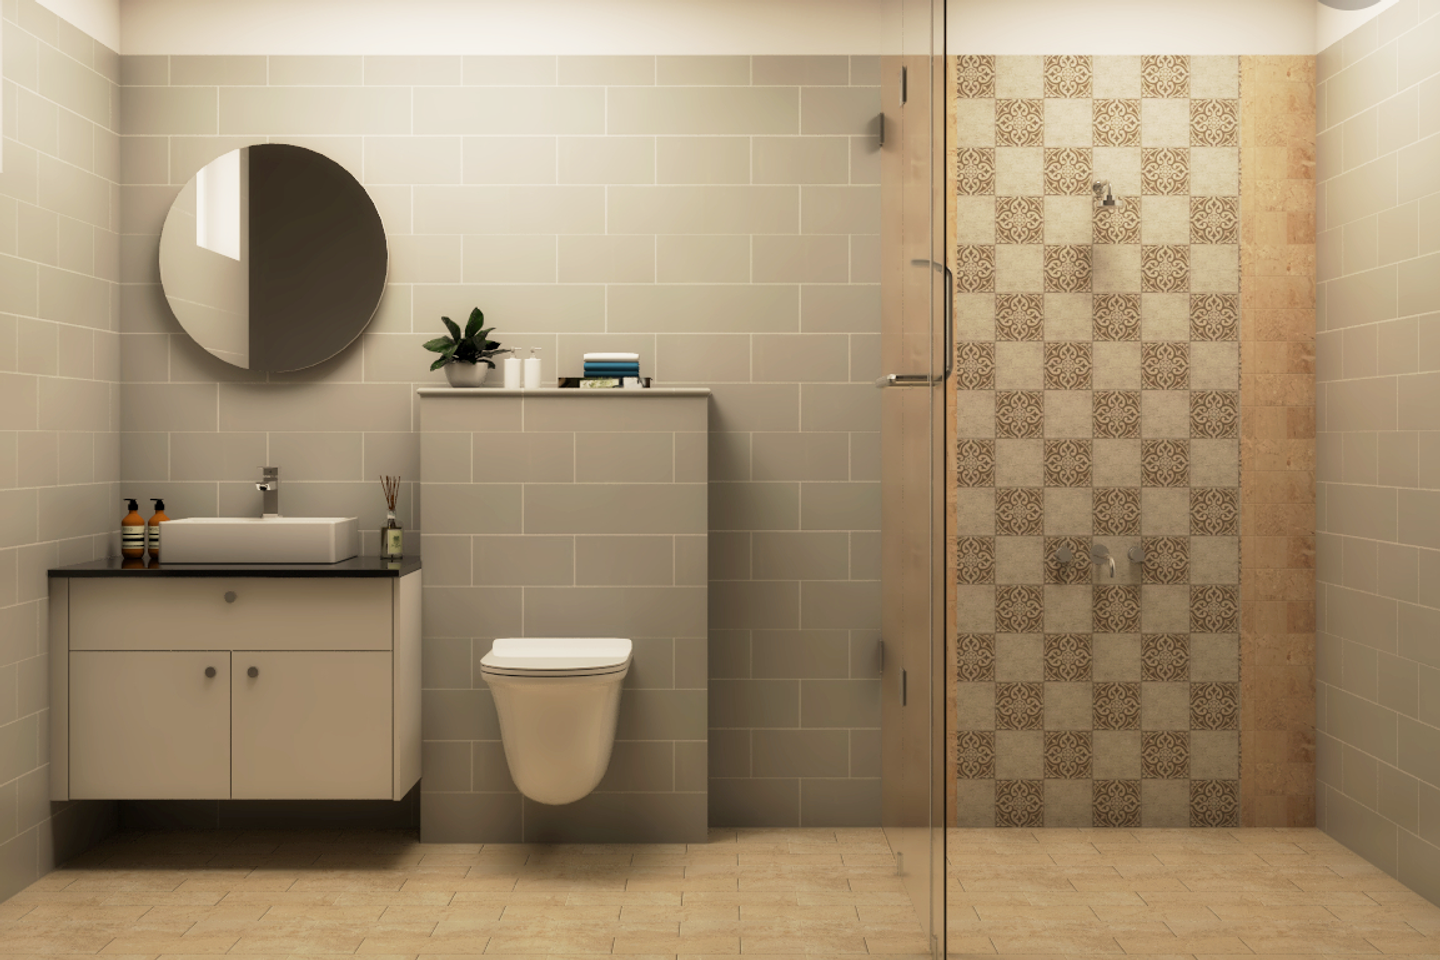 Spacious Bathroom With Backlit Mirror - Livspace